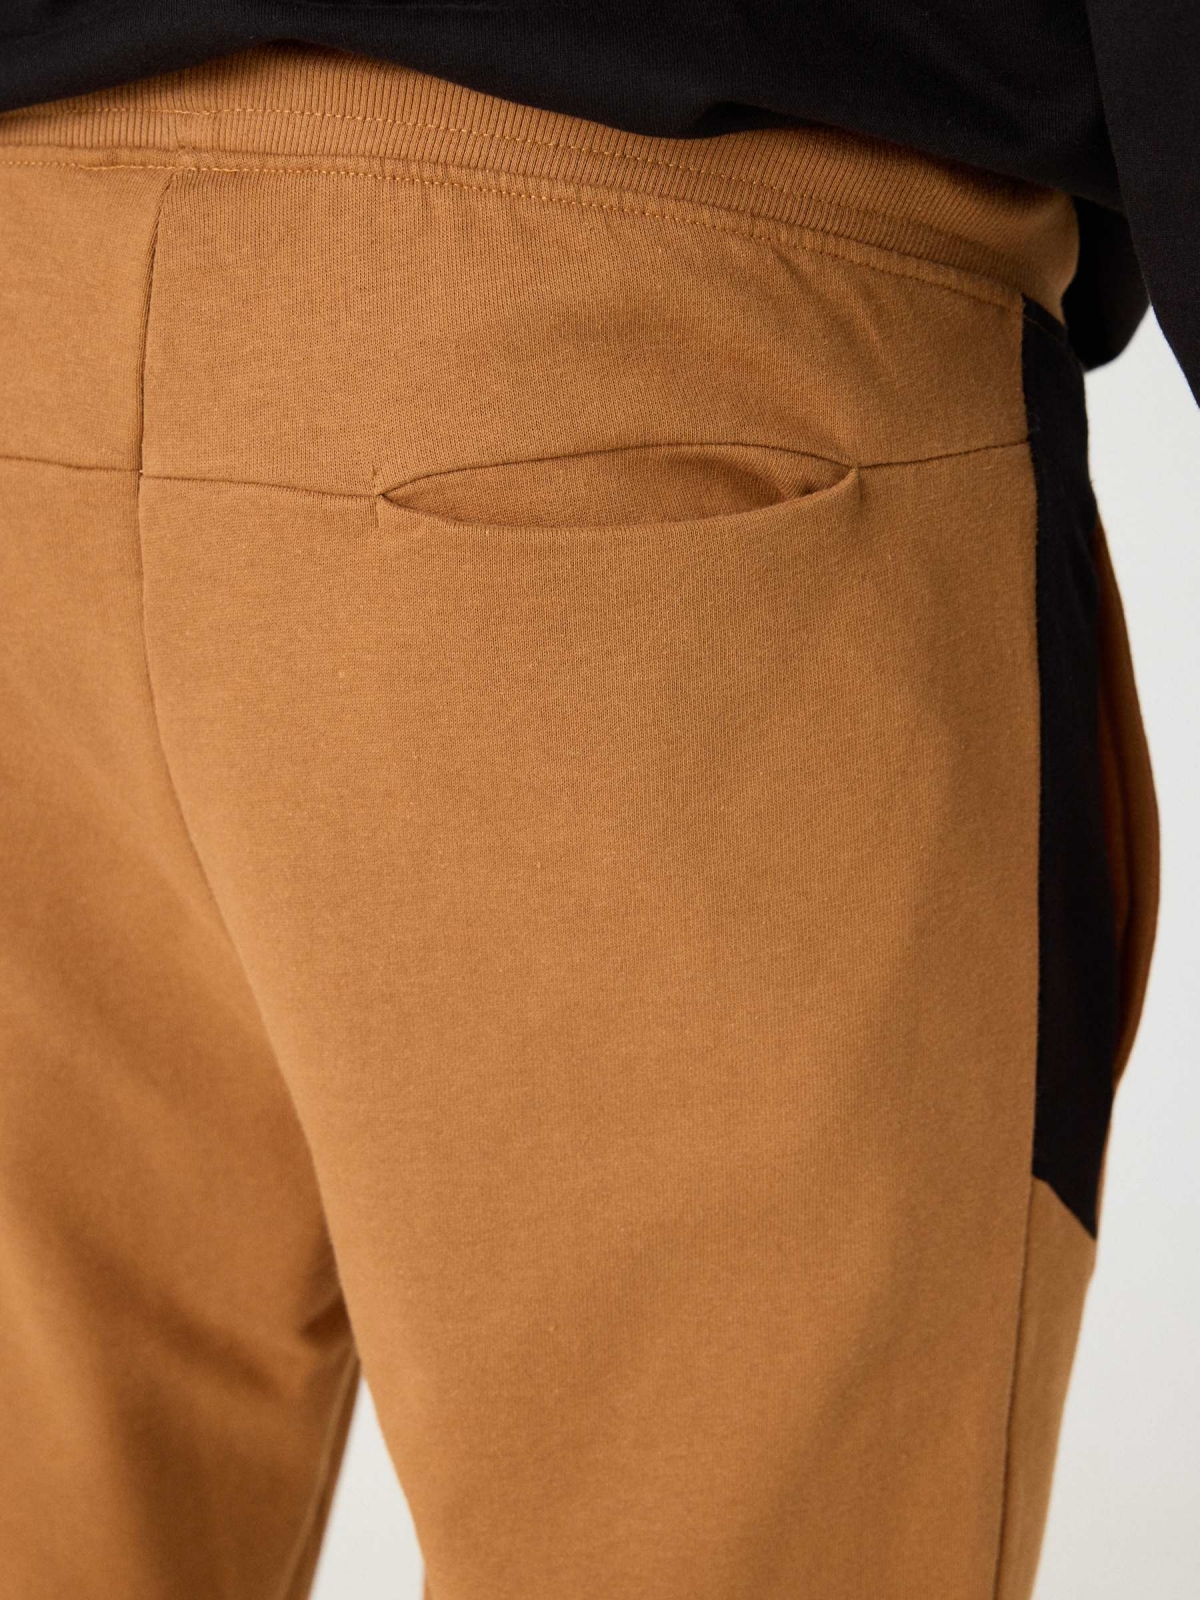 Jogger pants light brown detail view